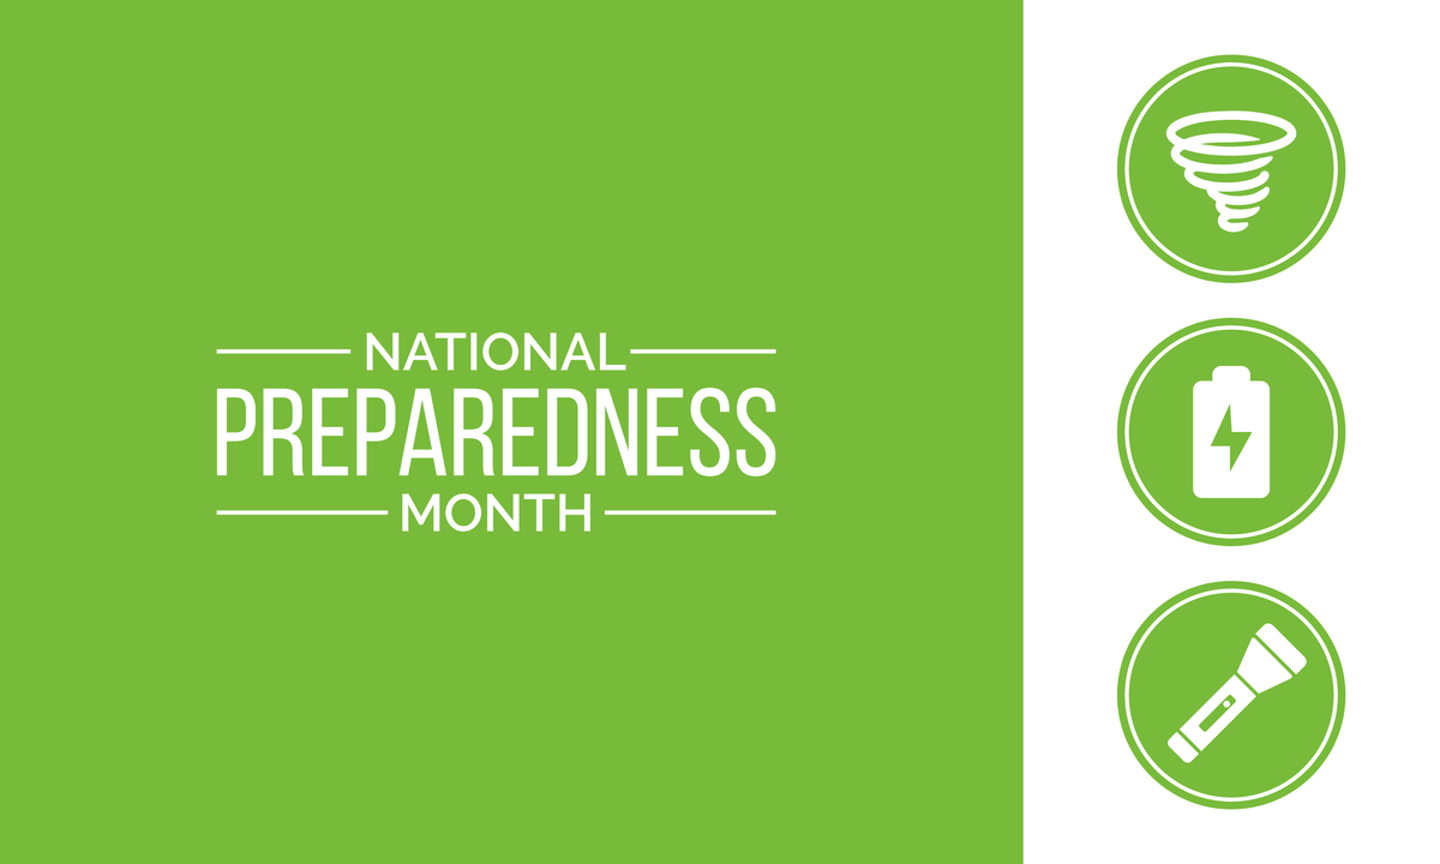 National preparedness month icon